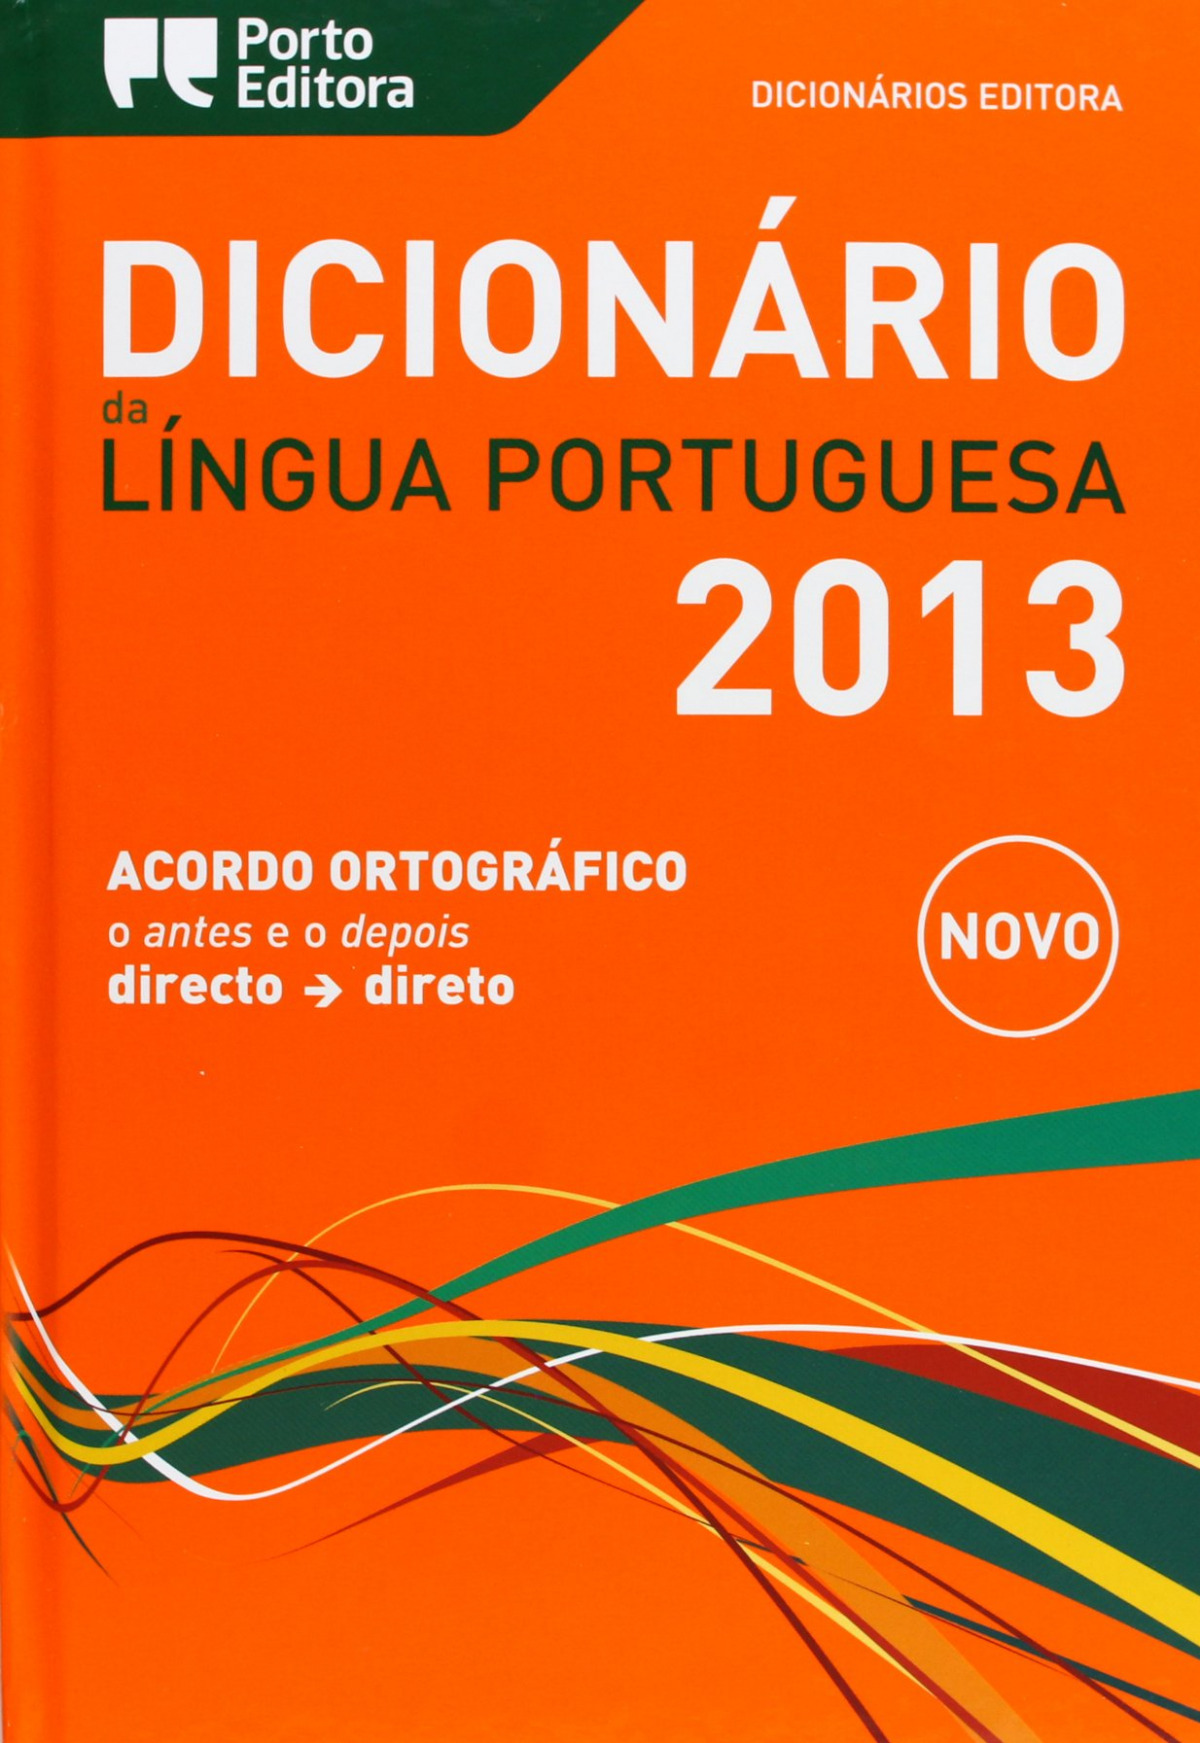 Dicionario Editora da Lingua Portuguesa - Vv.Aa.